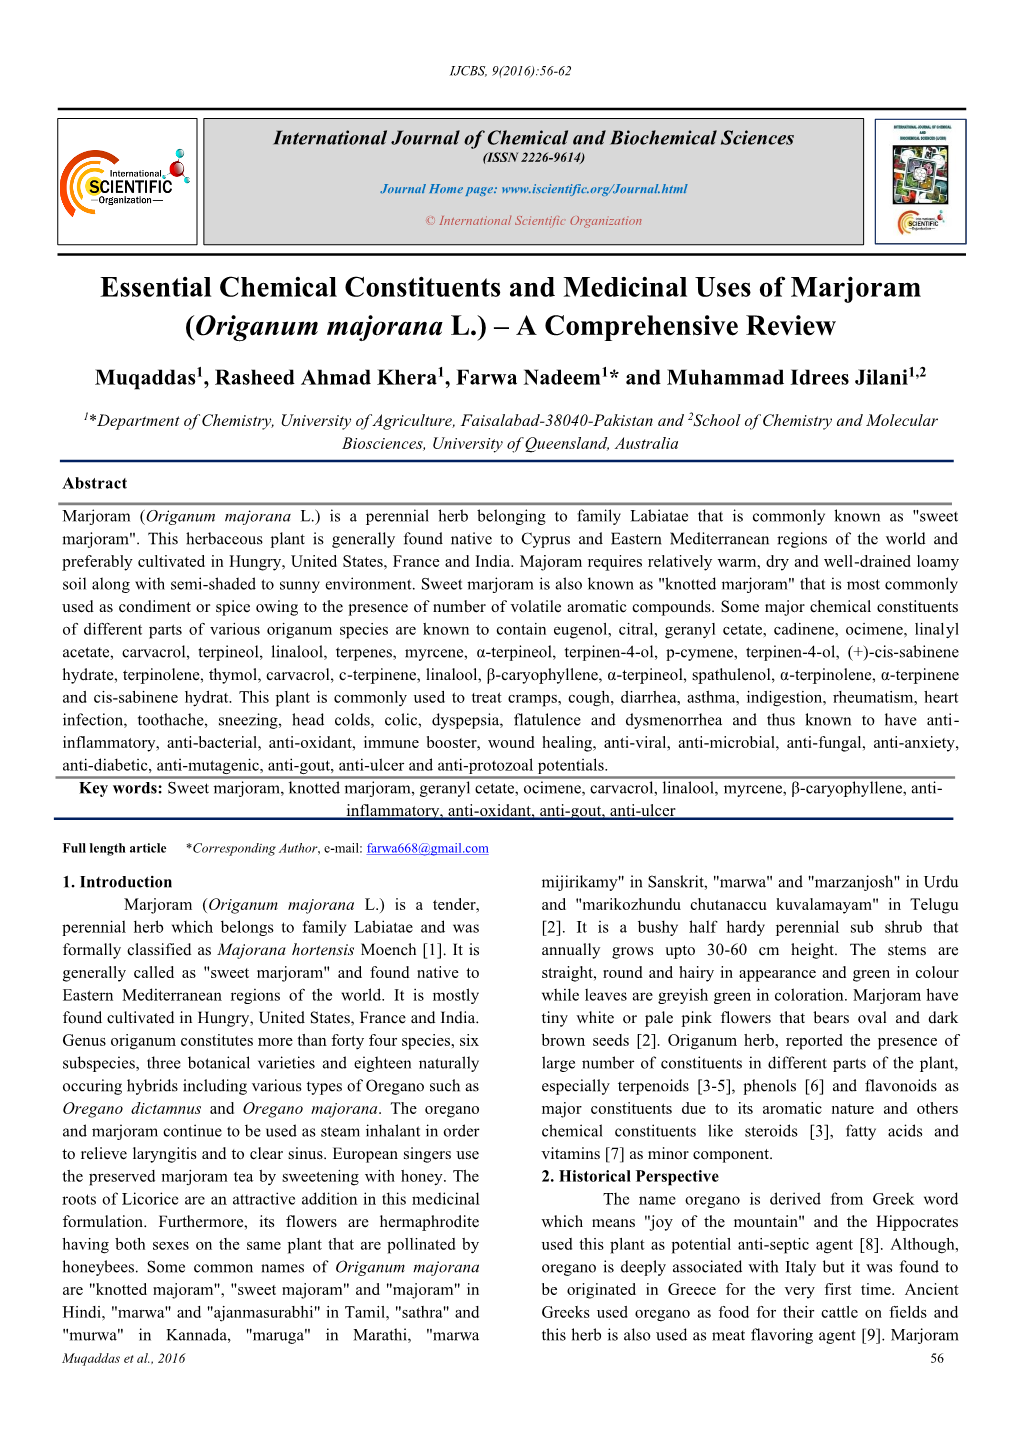 Essential Chemical Constituents and Medicinal Uses of Marjoram (Origanum Majorana L.) – a Comprehensive Review